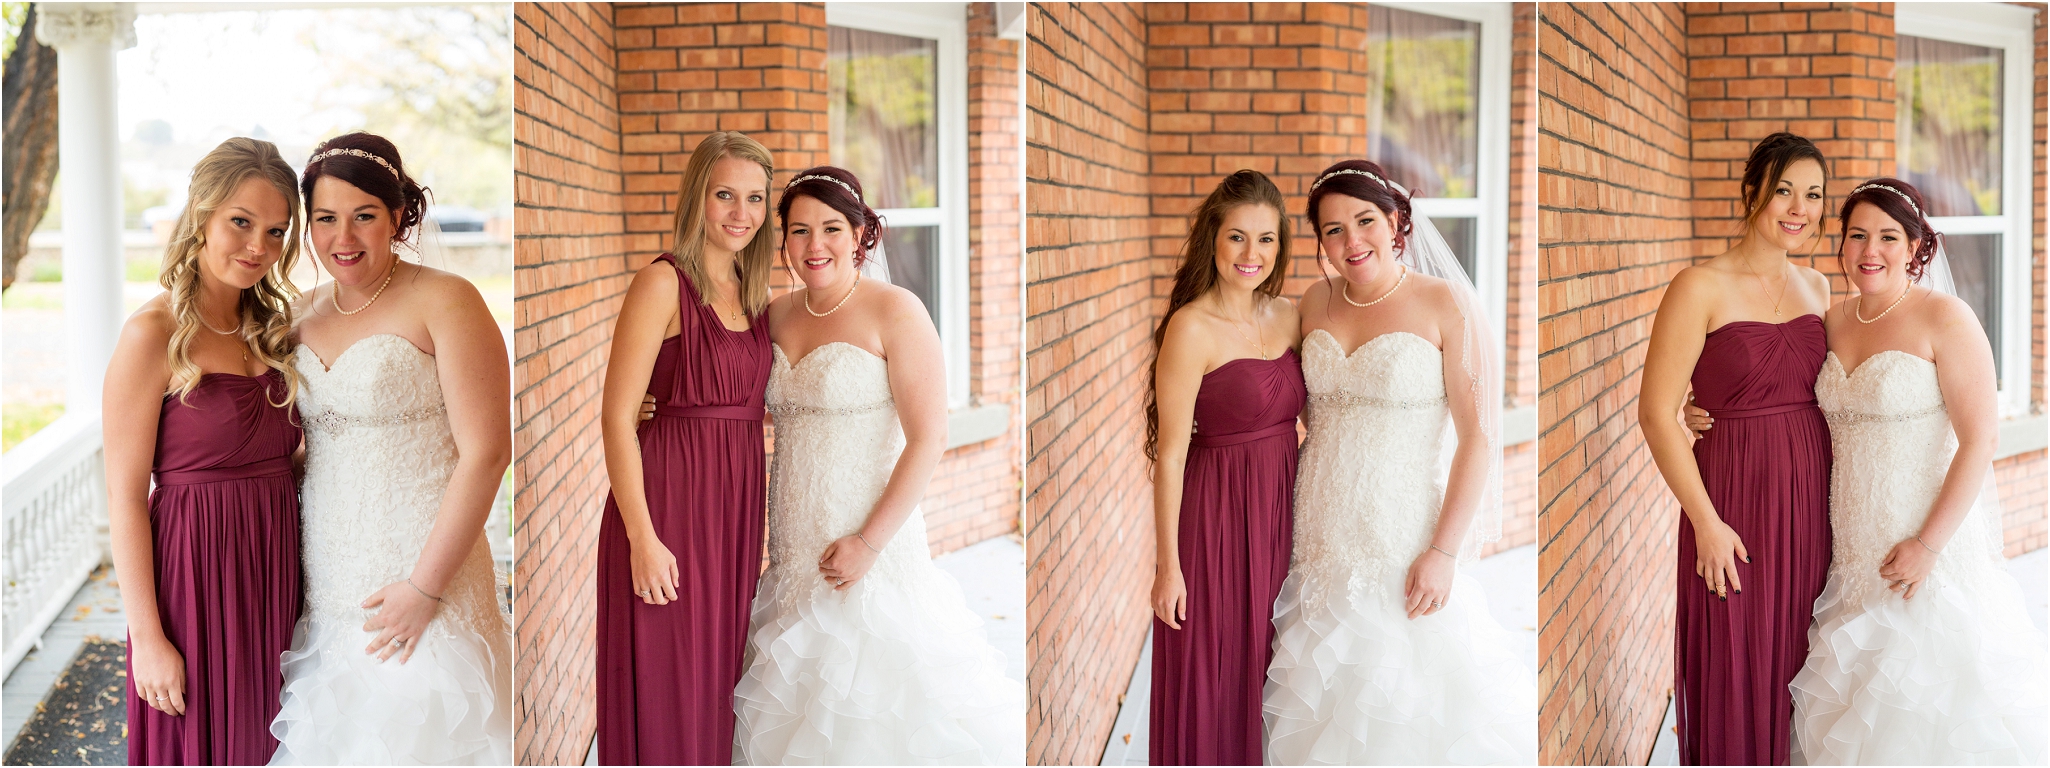 bridesmaids dresses edmonton wedding photographer